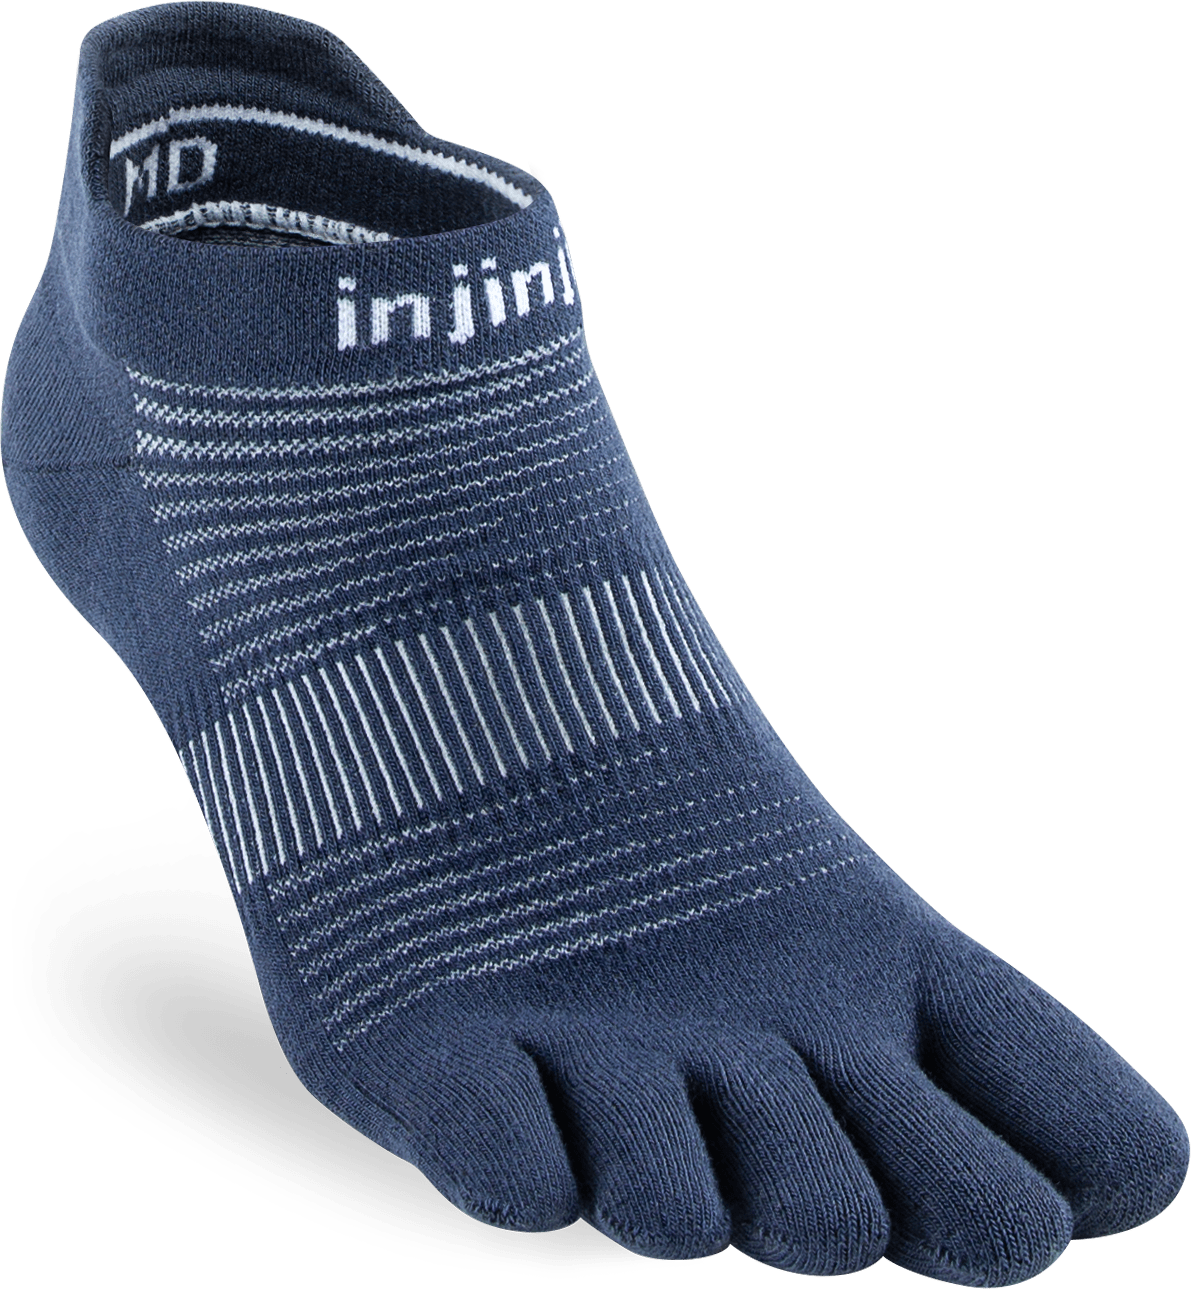 Injinji Socks Small / Navy Injinji RUN Lightweight No-Show XMiles